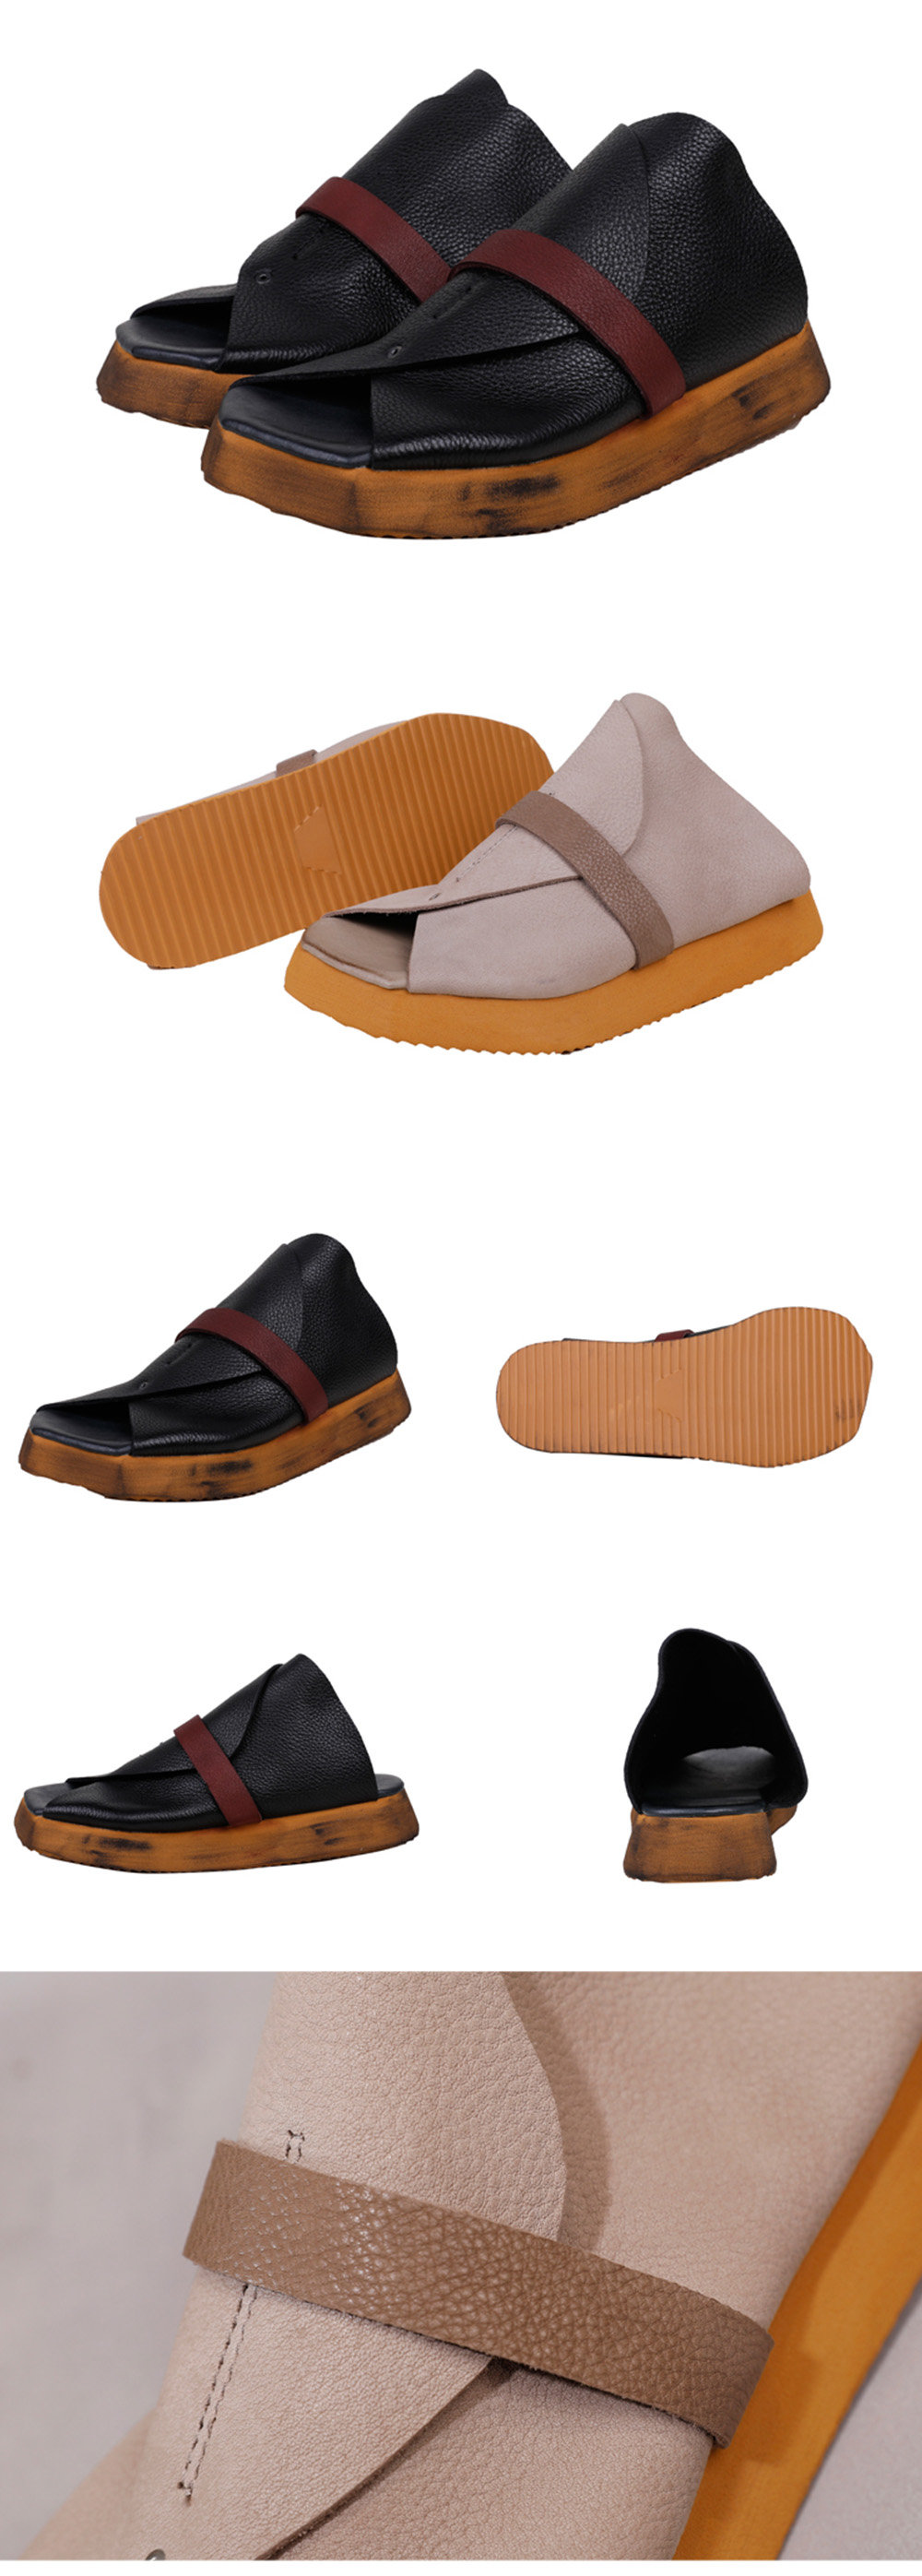 Slip-on Sandals - Real Leather - ApolloBox